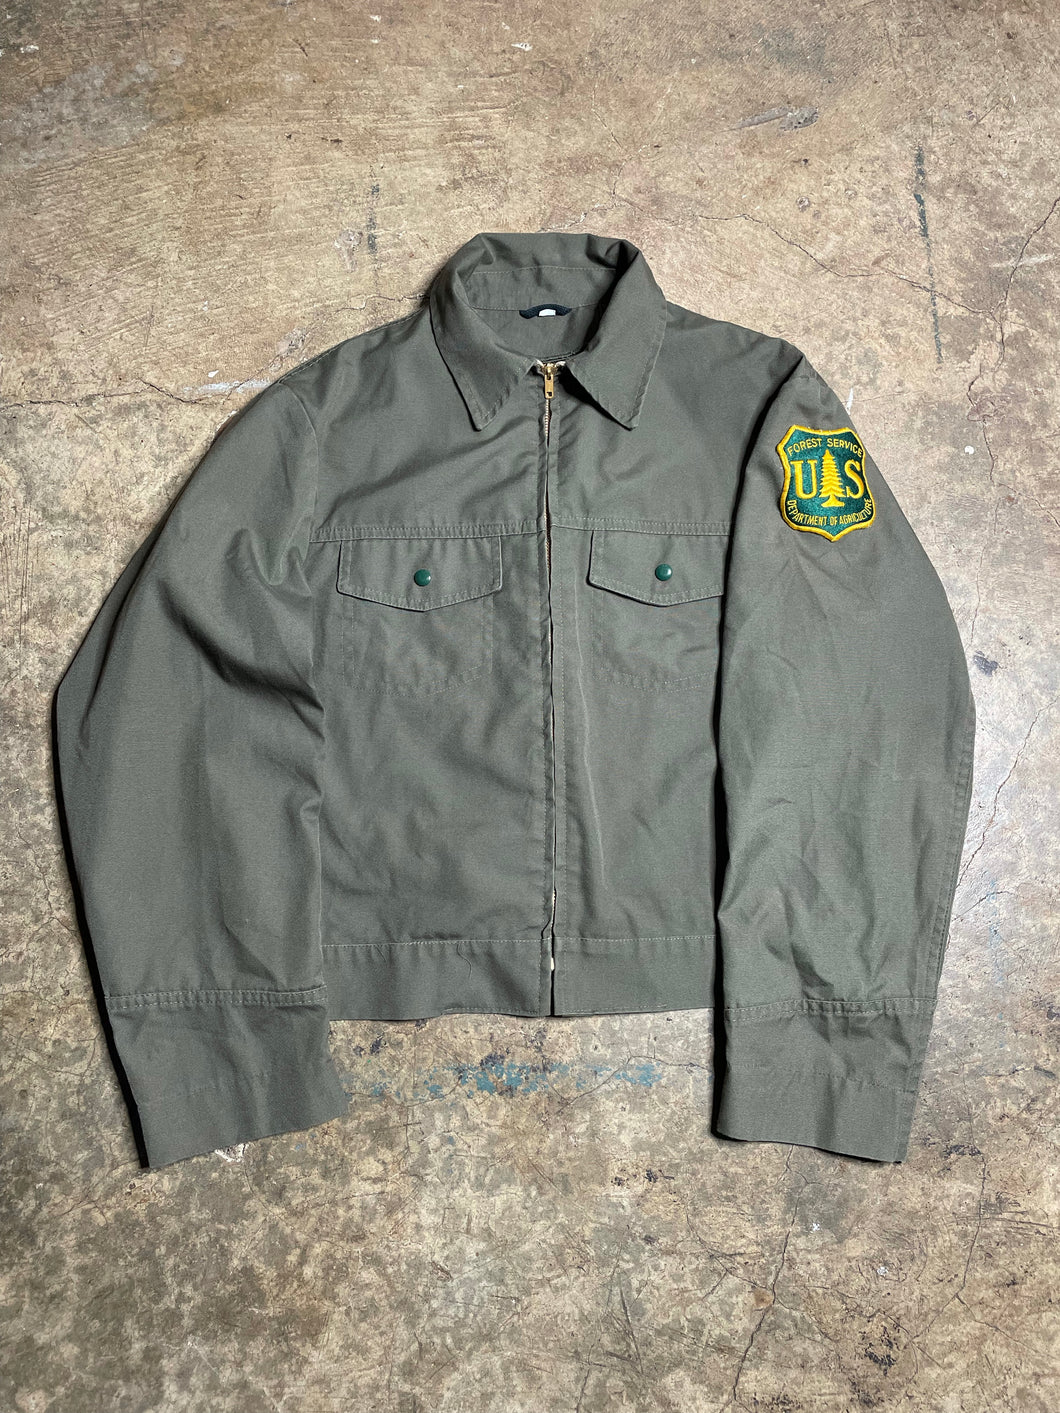 60’s/70’s US Forest Service Jacket - L